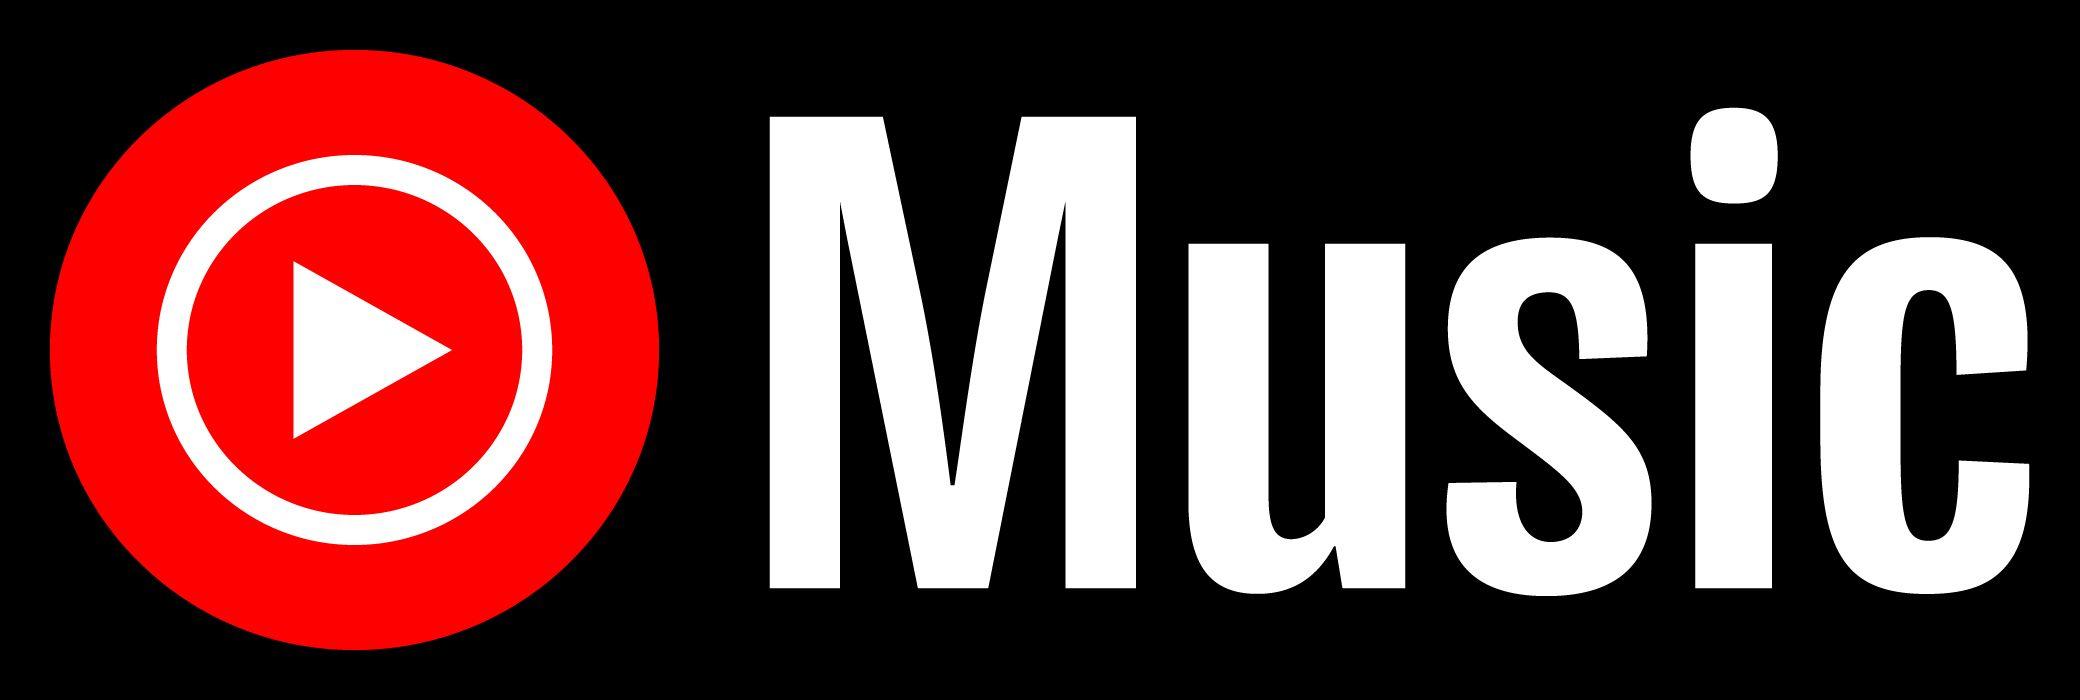 YouTube Music Logo - Premium subscribers in Q3 2020 ...